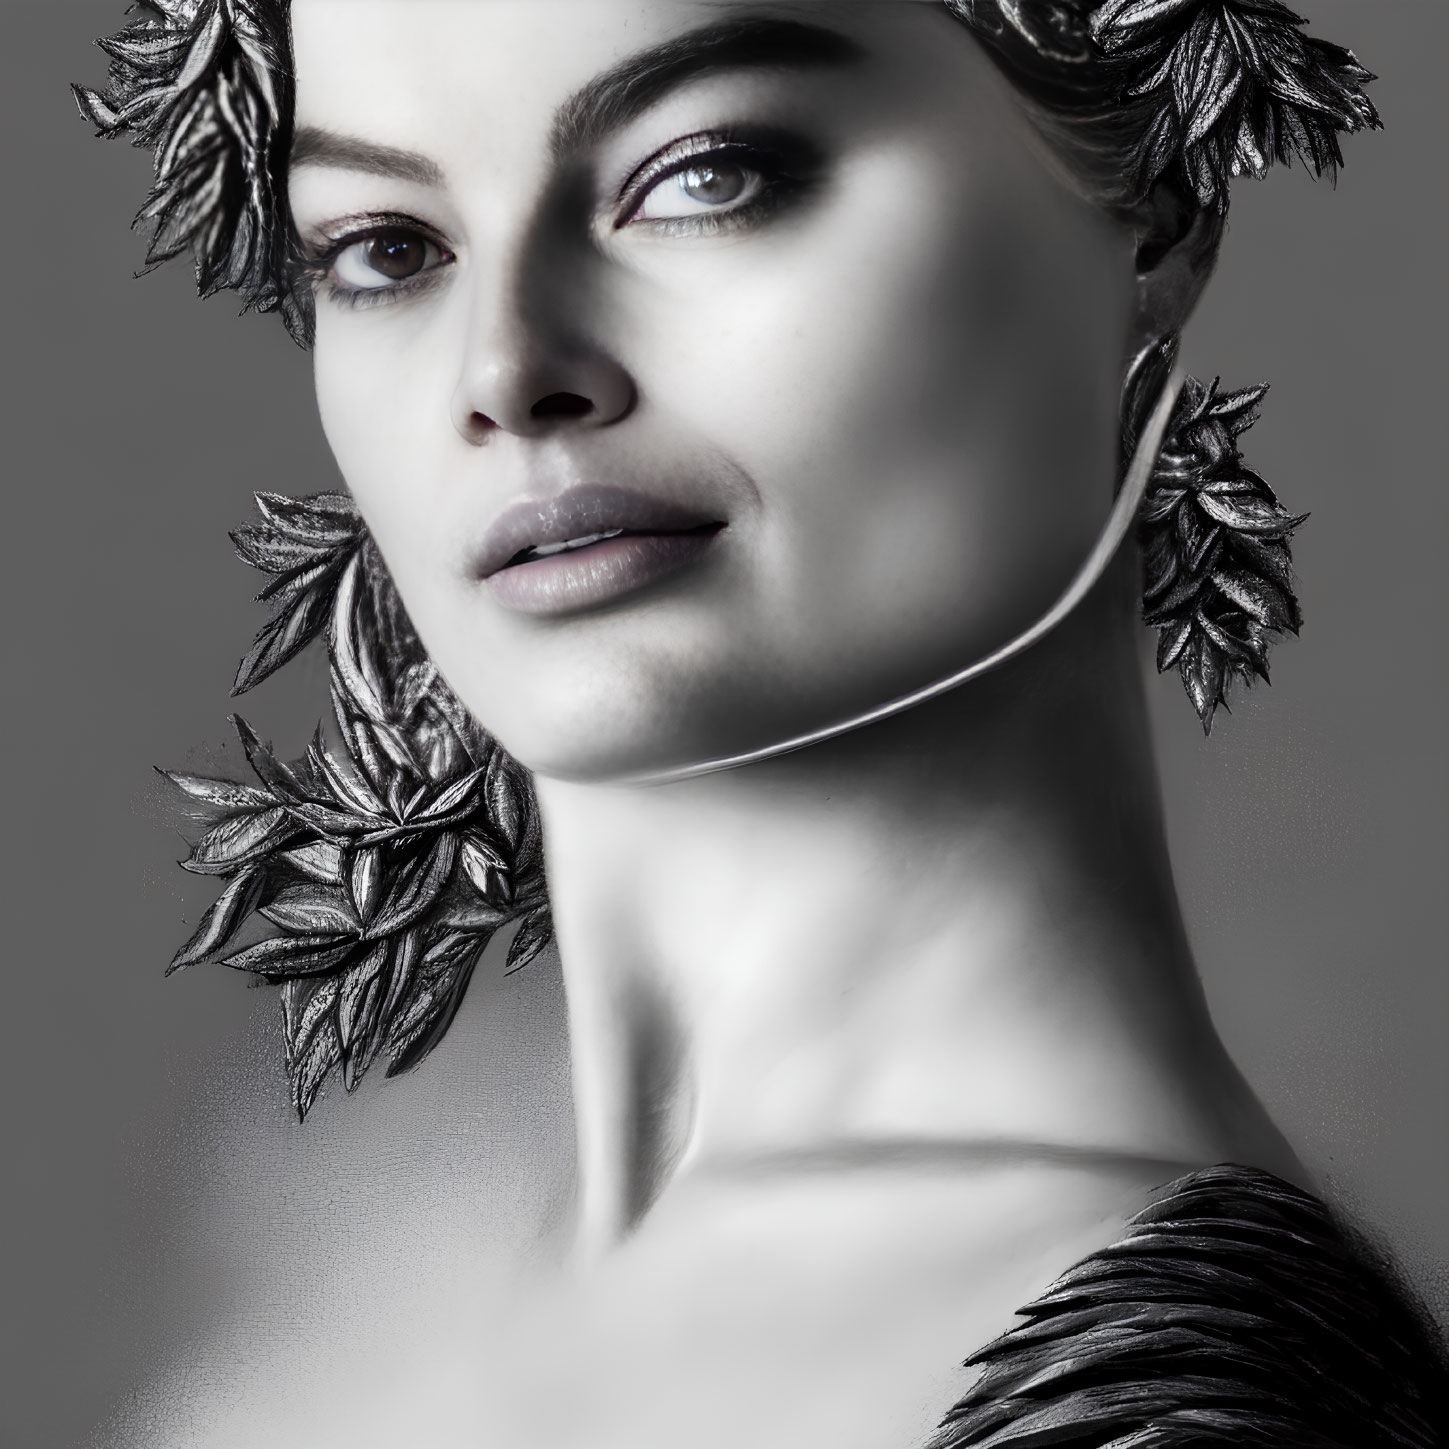 Monochrome portrait of a woman with leaf adornments